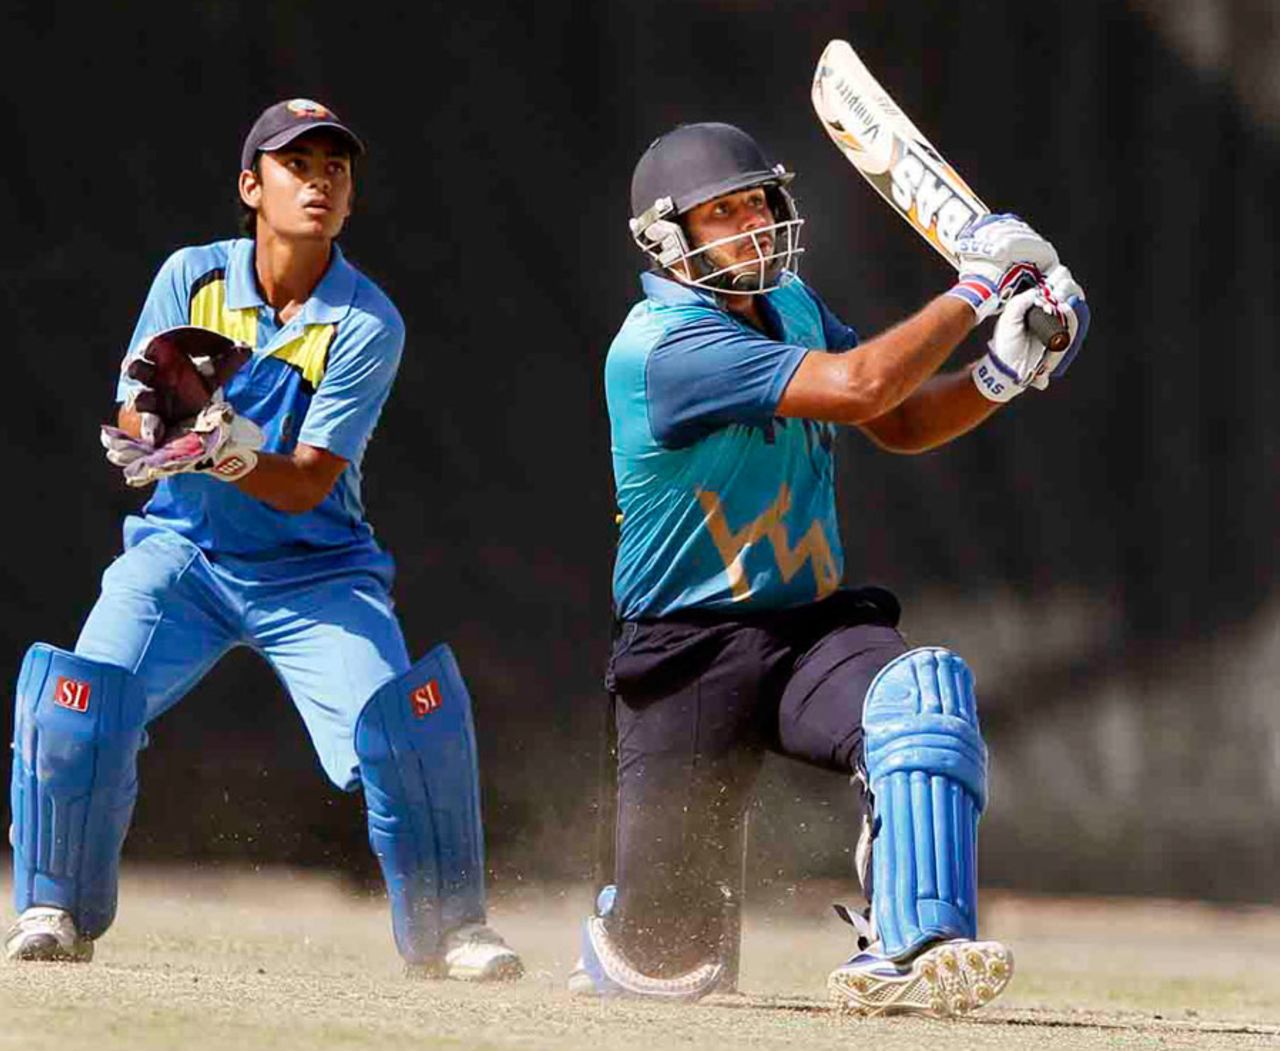 Guntashveer Singh's 65 off 44 balls took Haryana to victory, Jharkhand v Haryana, Syed Mushtaq Ali Trophy, Rajkot, April 10, 2014